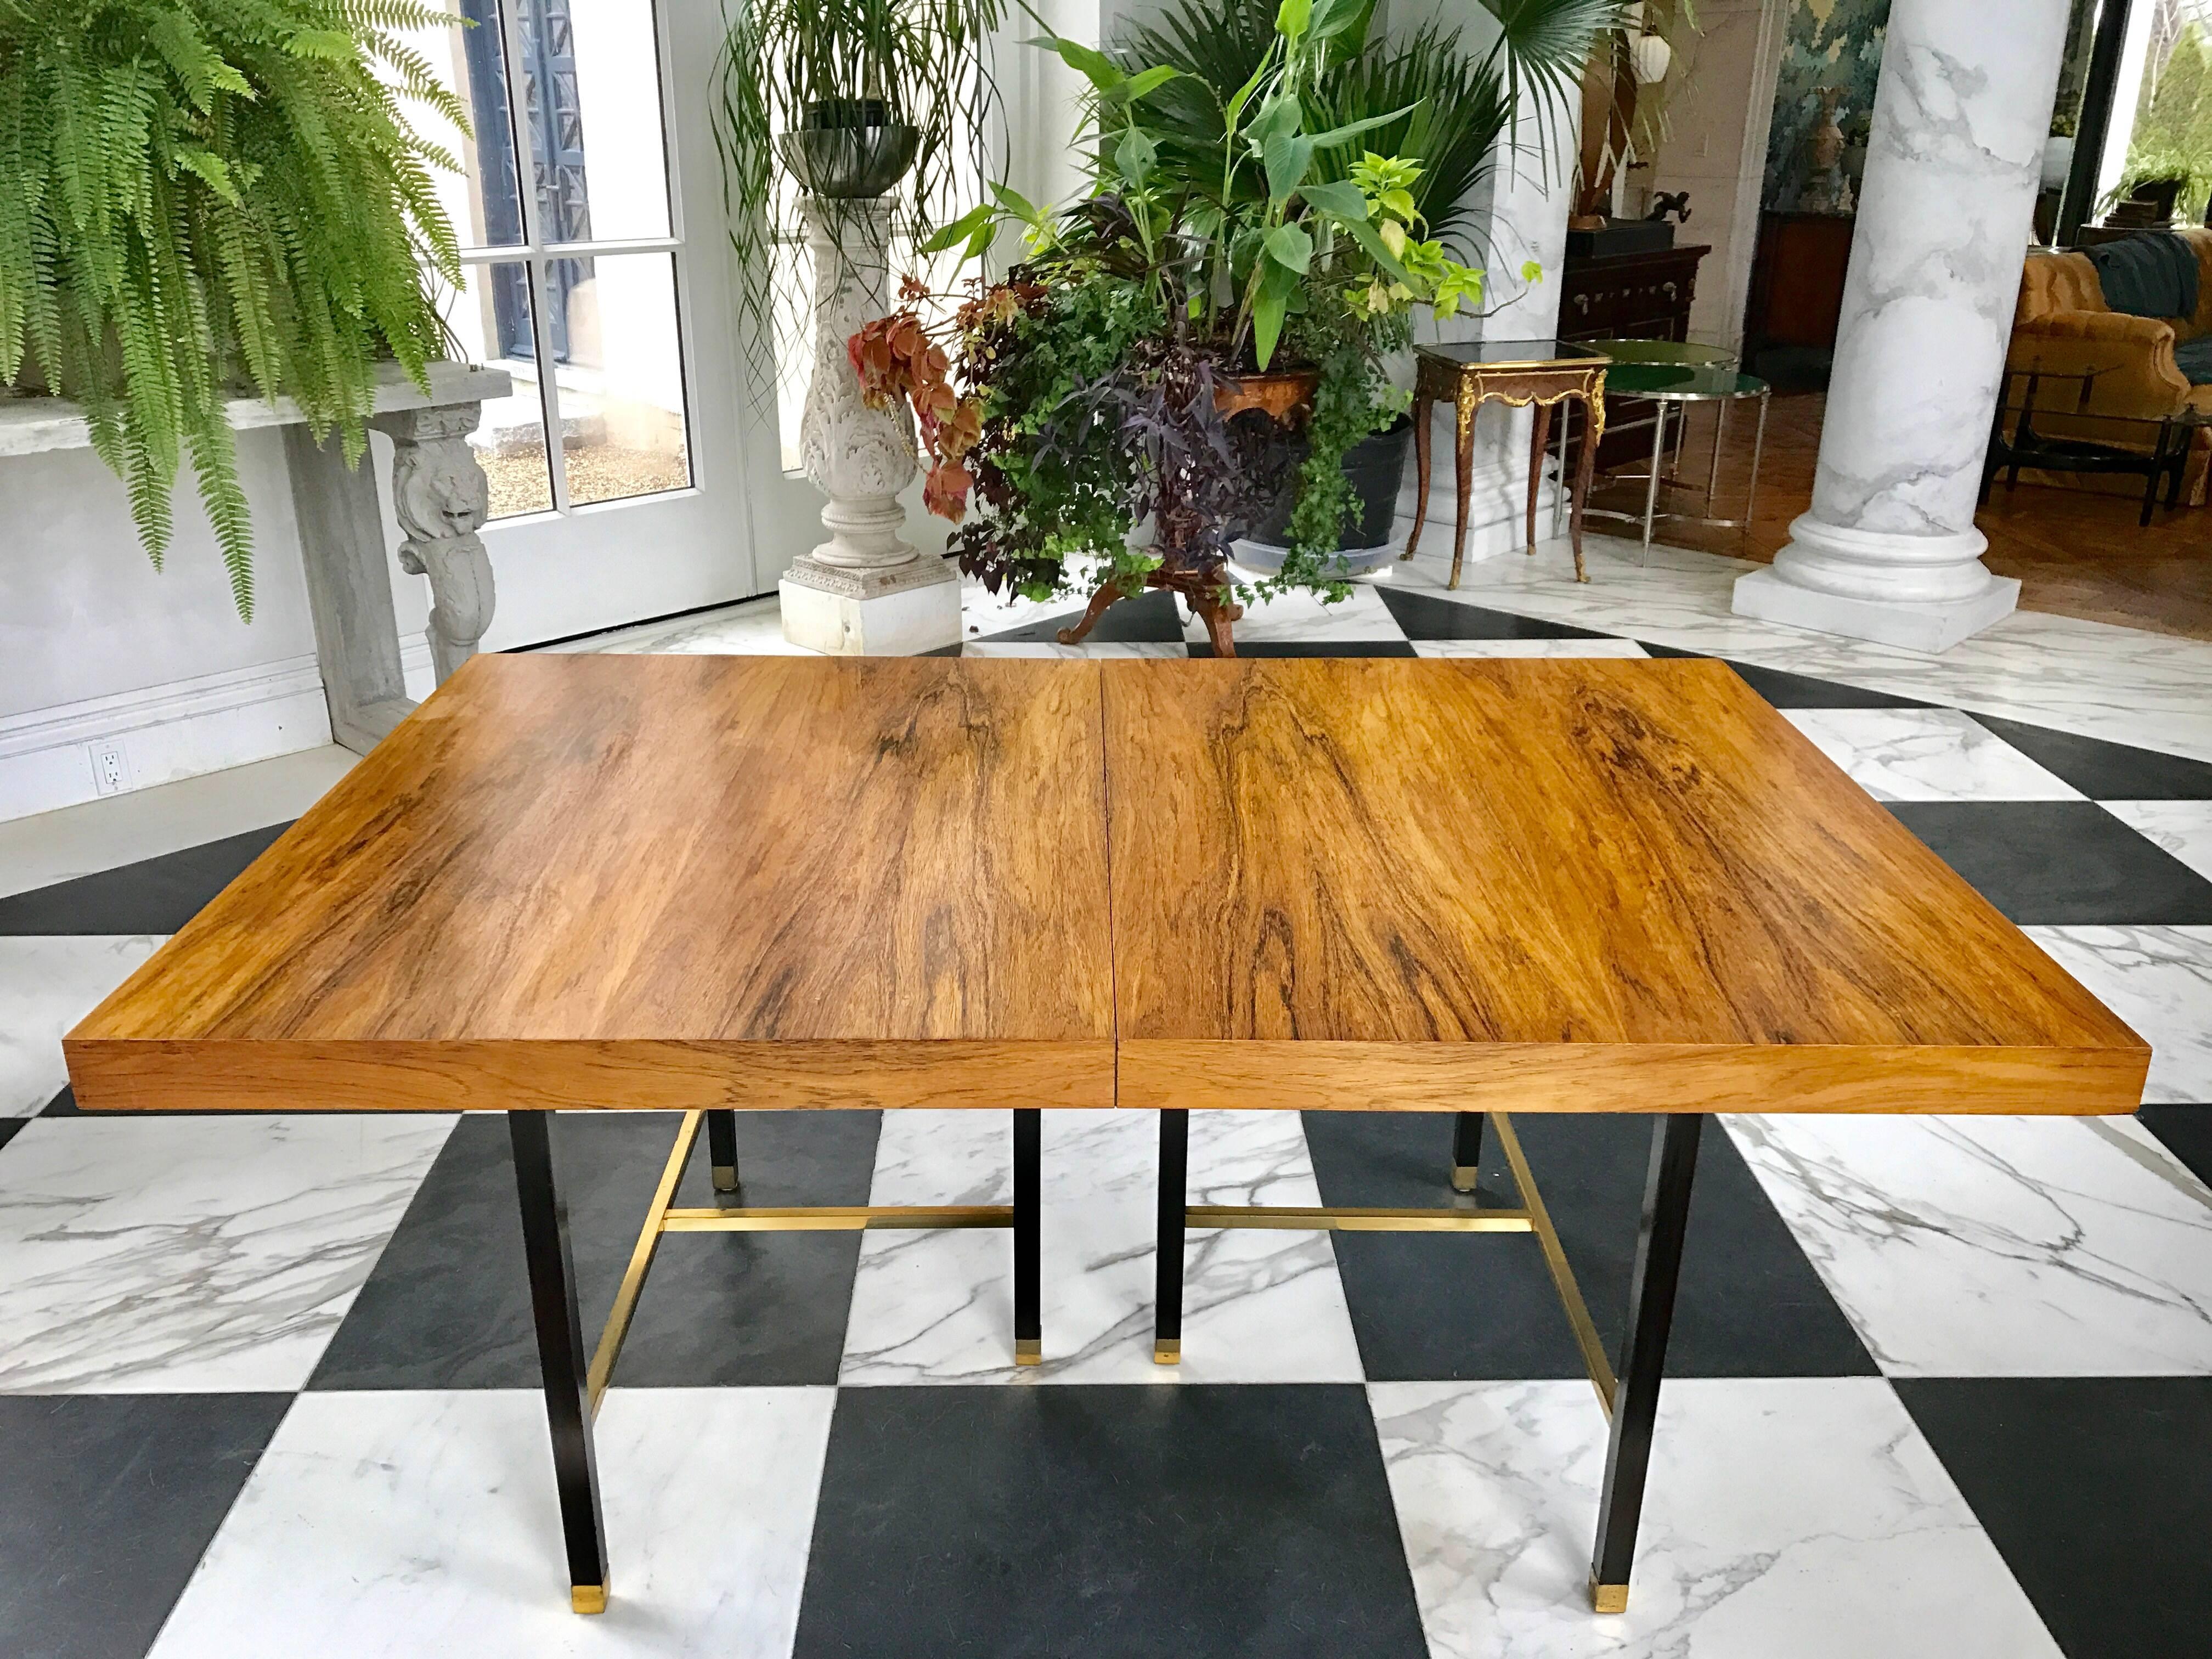 This striking rosewood dining table has a dark mahogany base.
Two 16